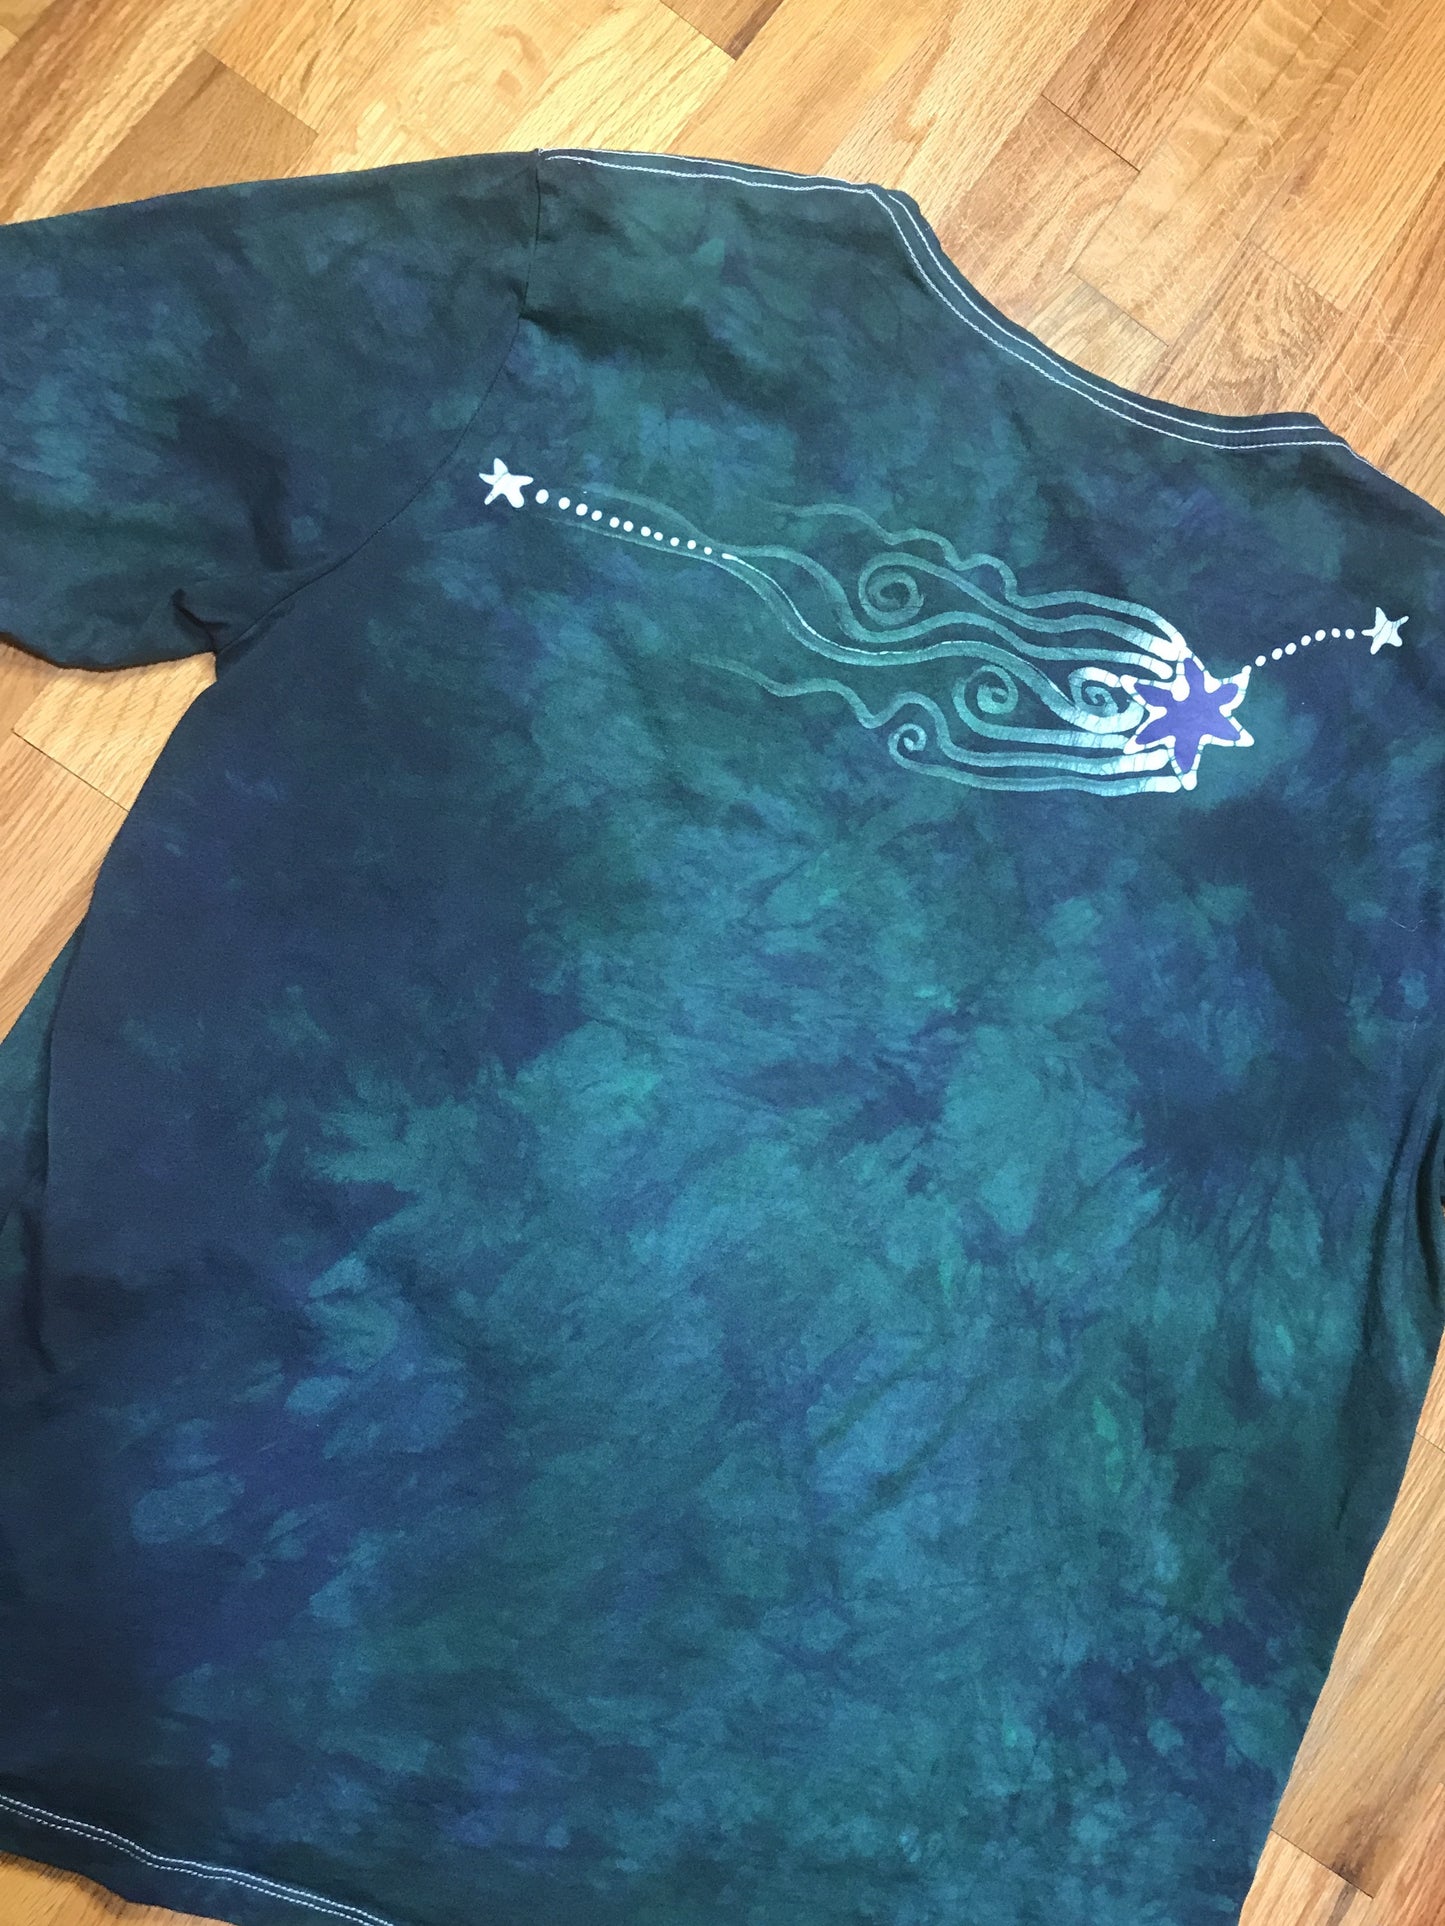 Teal and Purple Moonbeams Handmade Batik Scoop Neck Tshirt - Size 2X